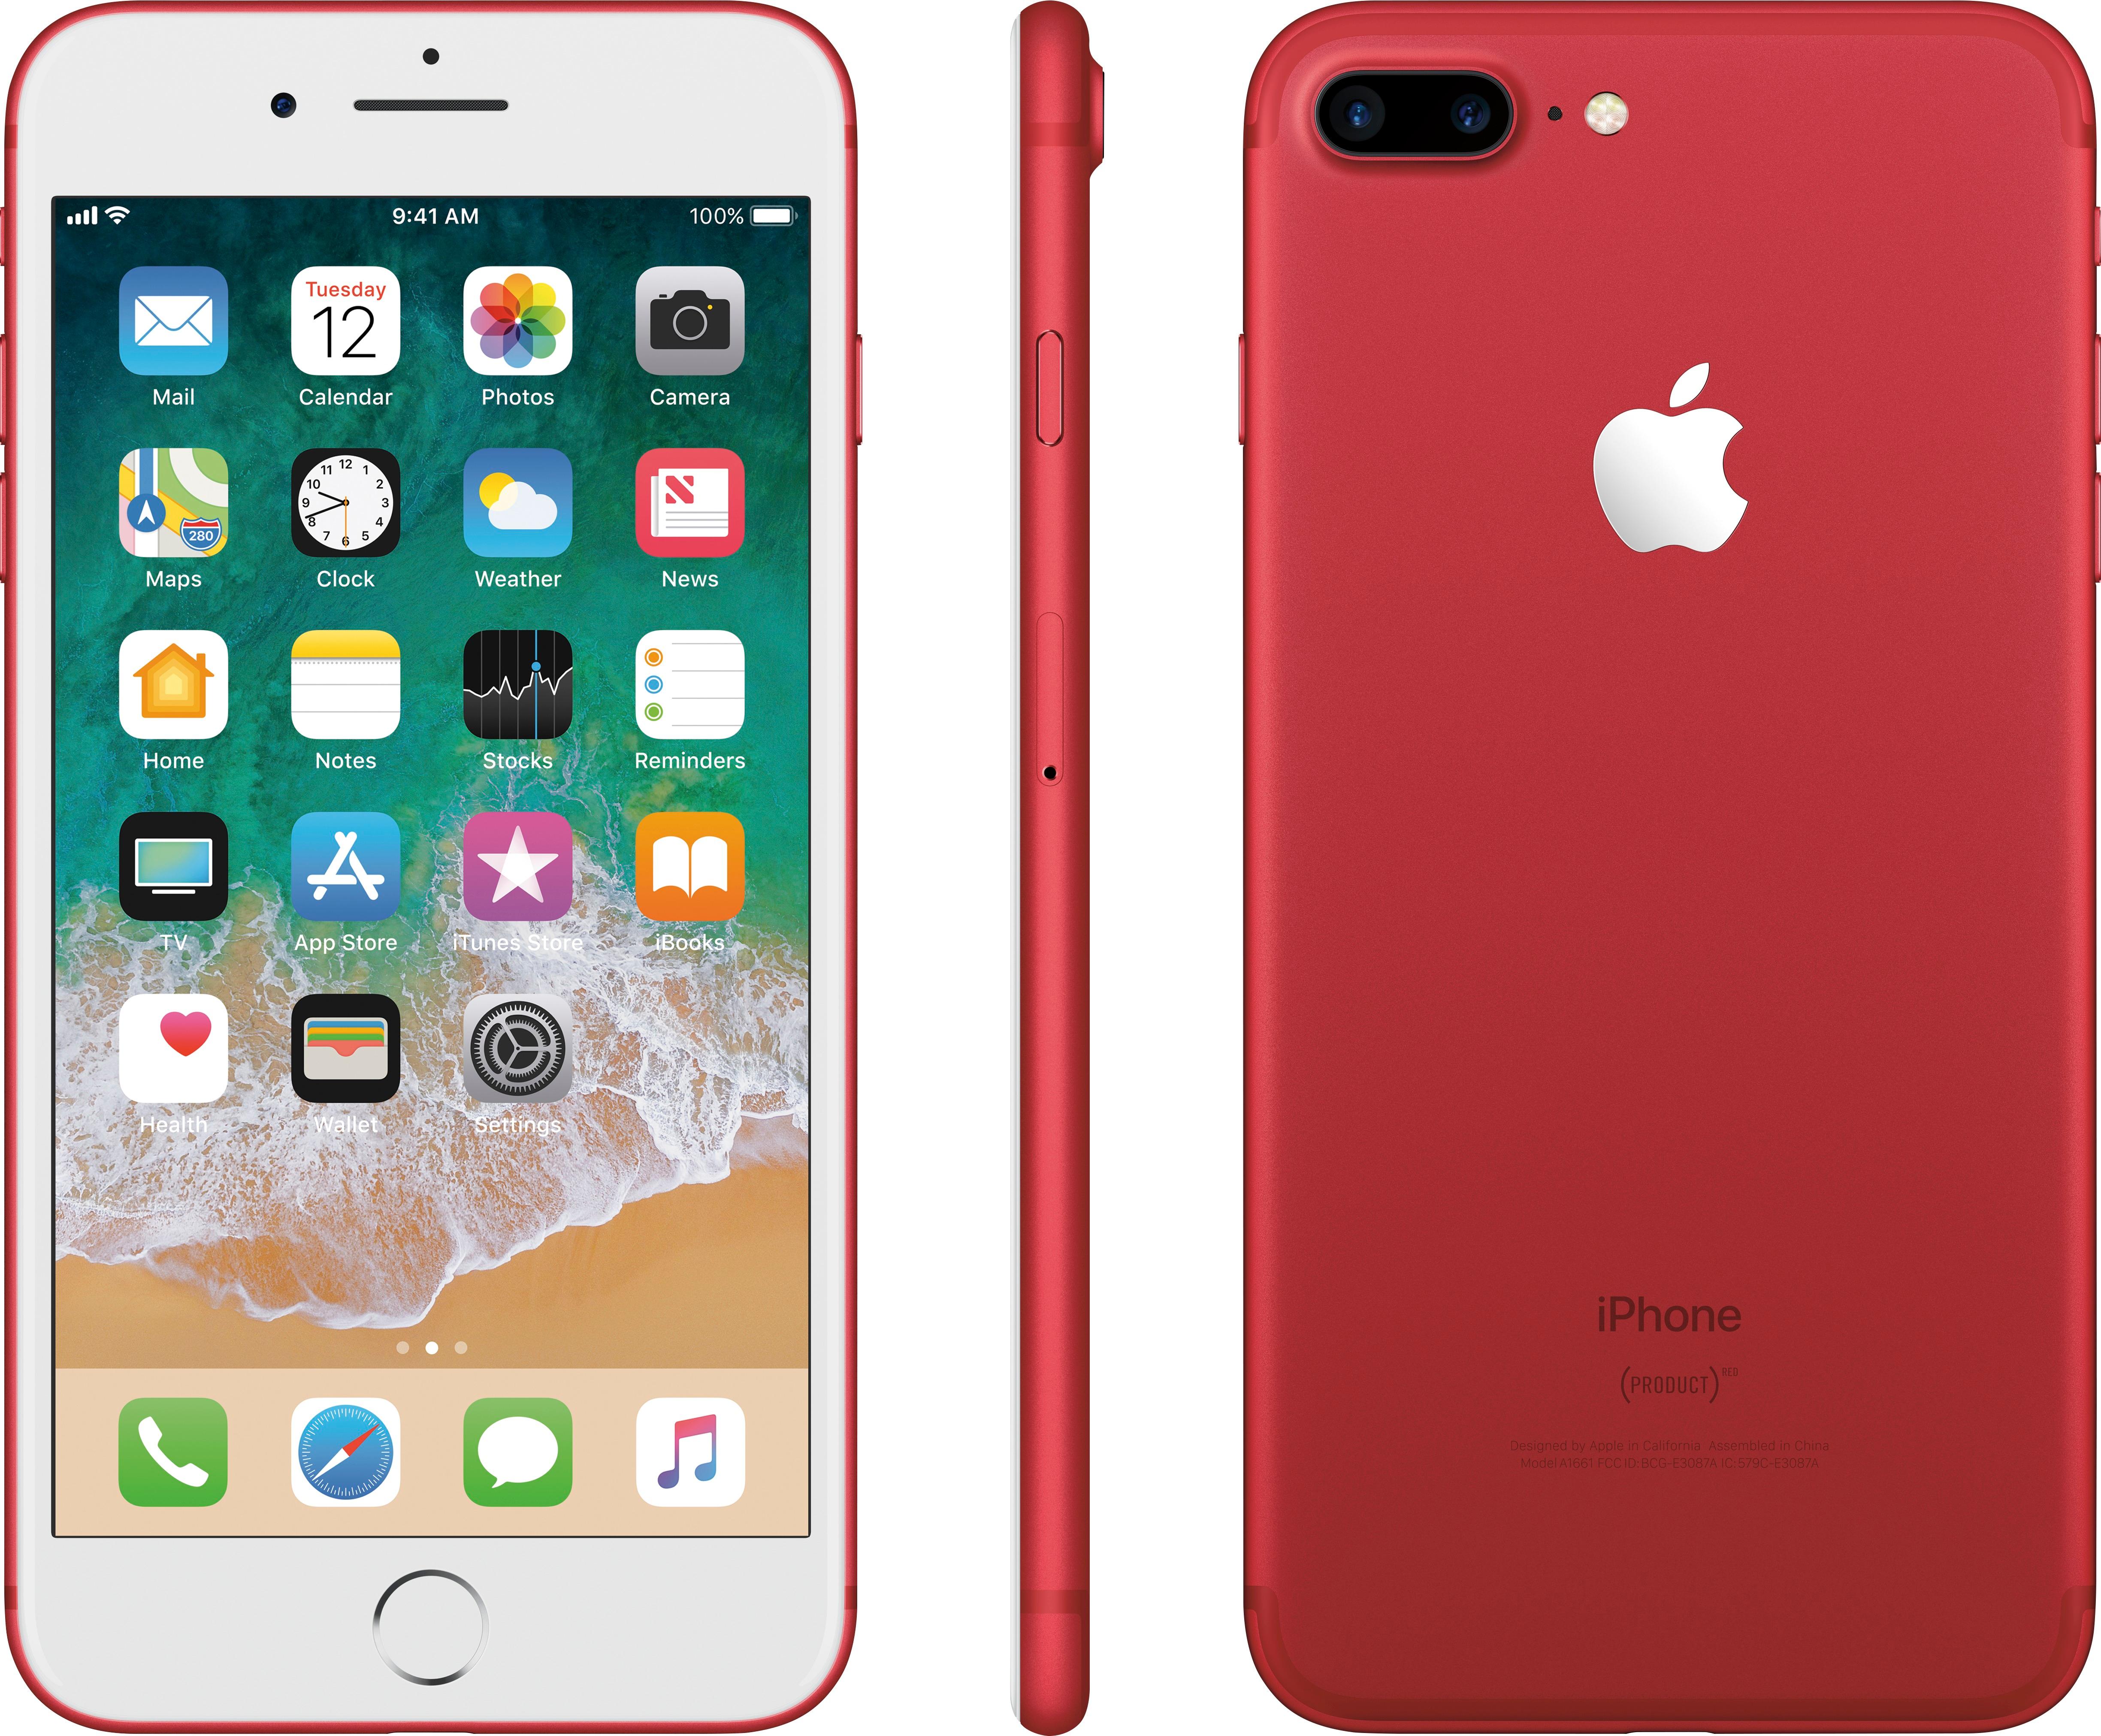 iPhone Red 128 GB Softbank